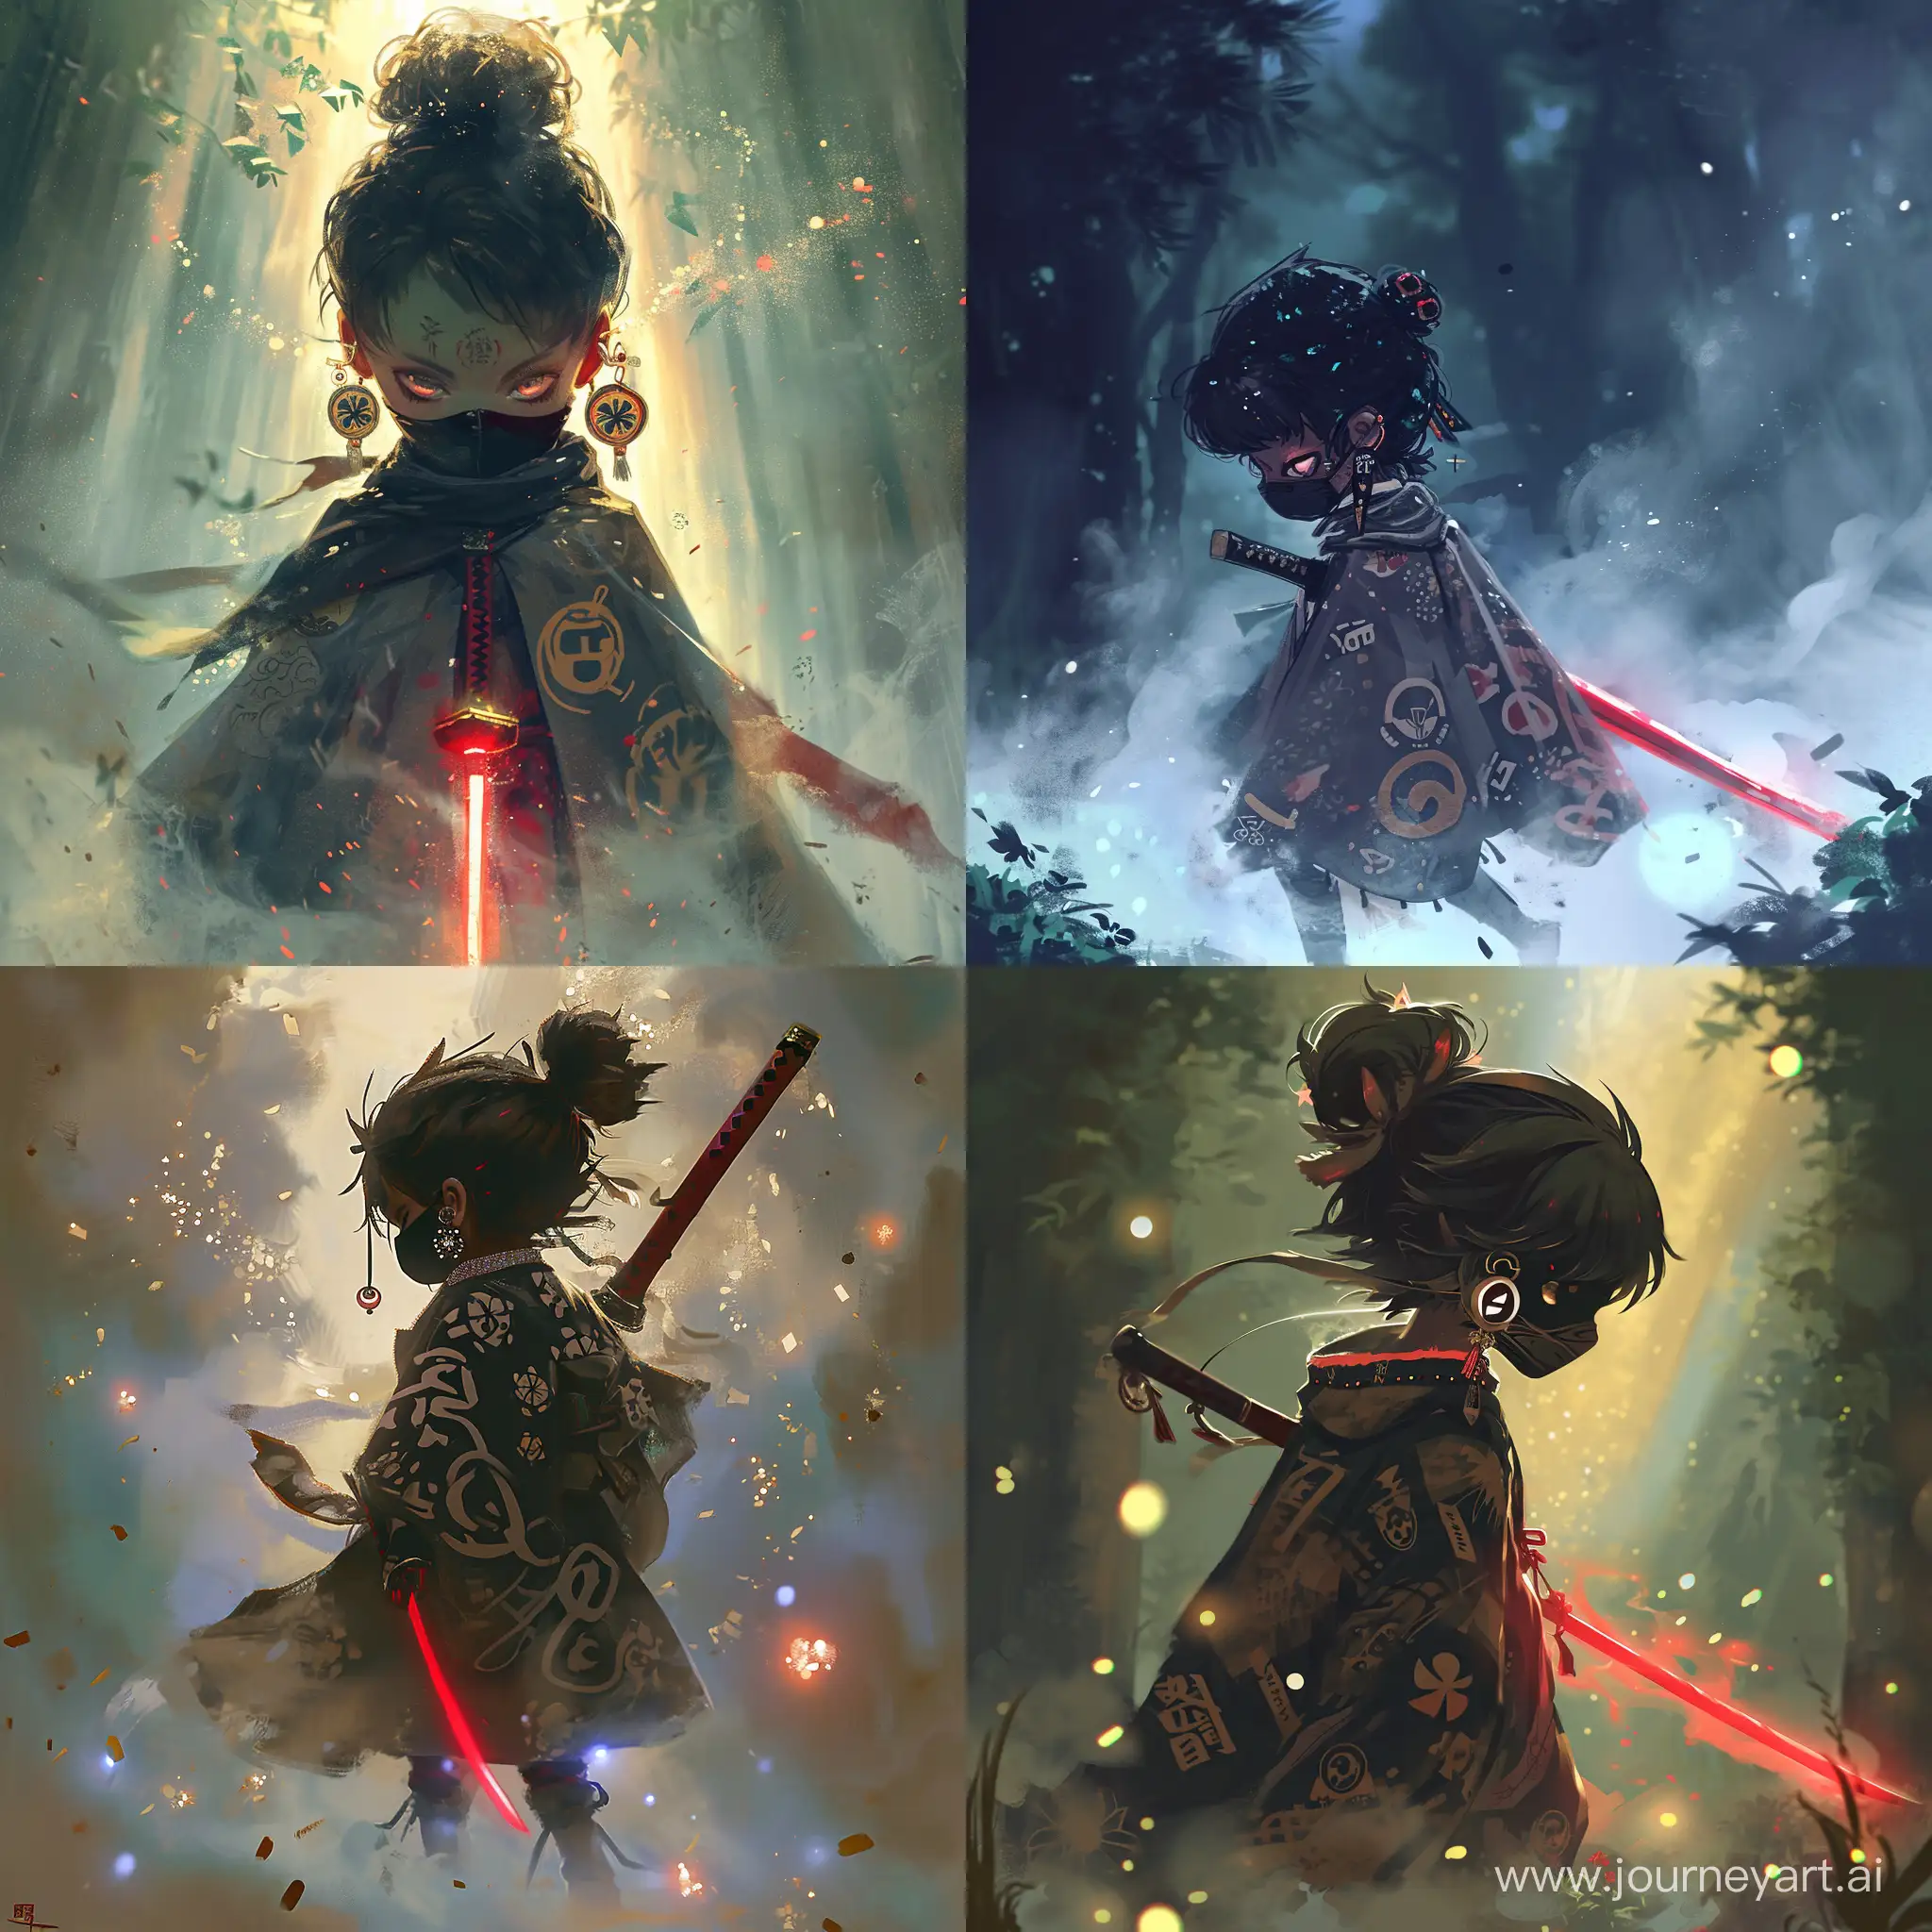 Mystical-Japanese-Demon-Teenager-Wielding-Dark-Red-Sword